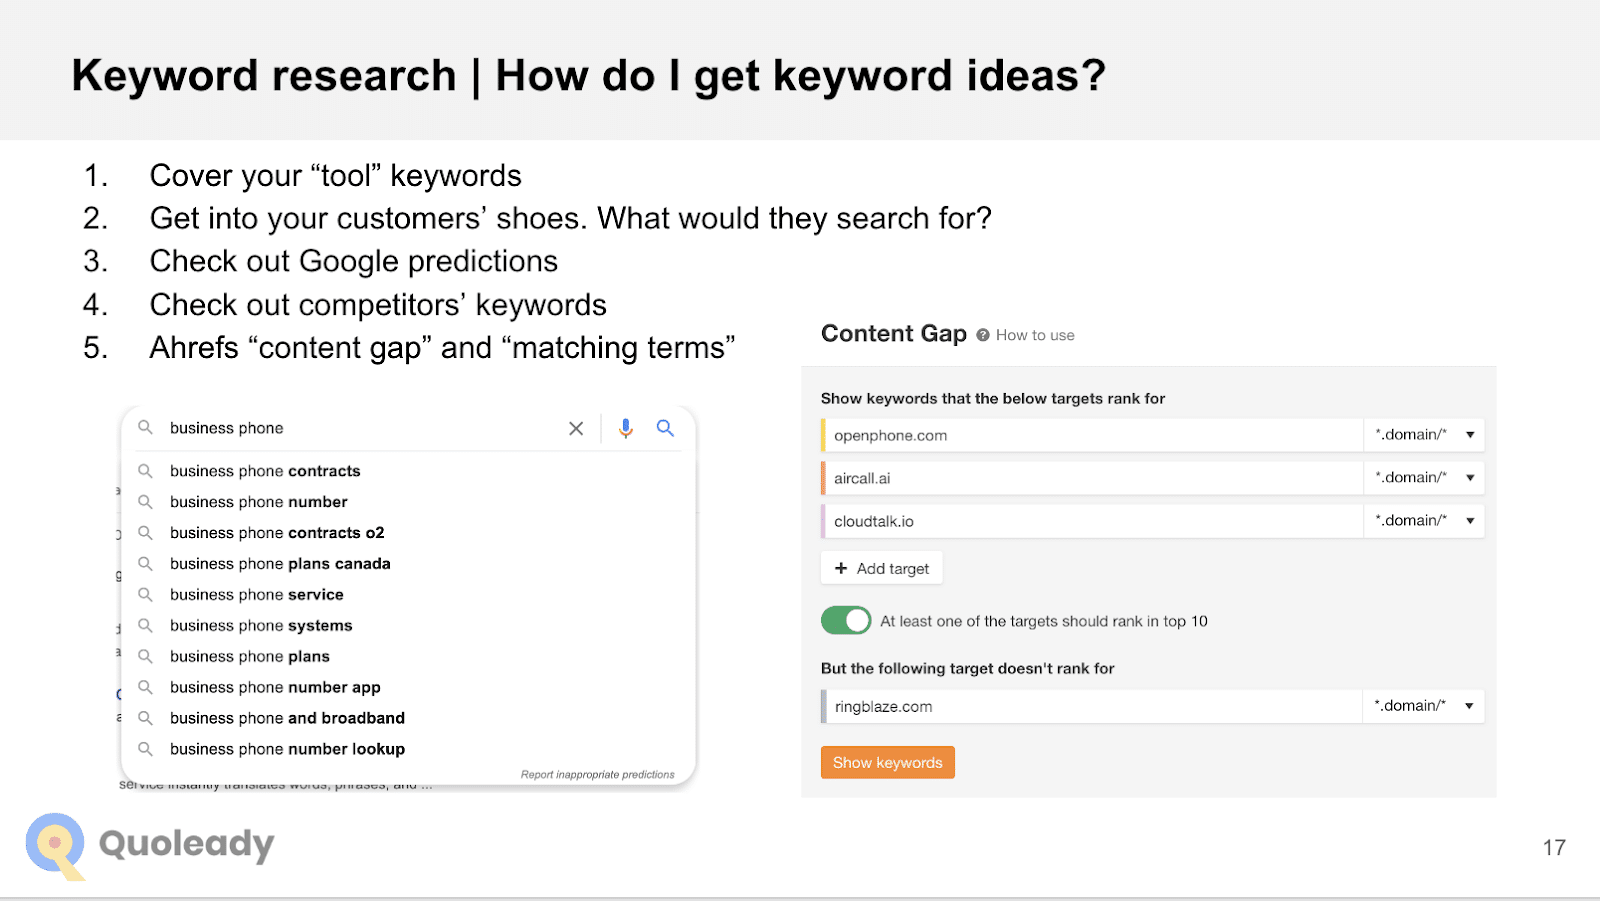 SaaS keyword research: How to get keyword ideas